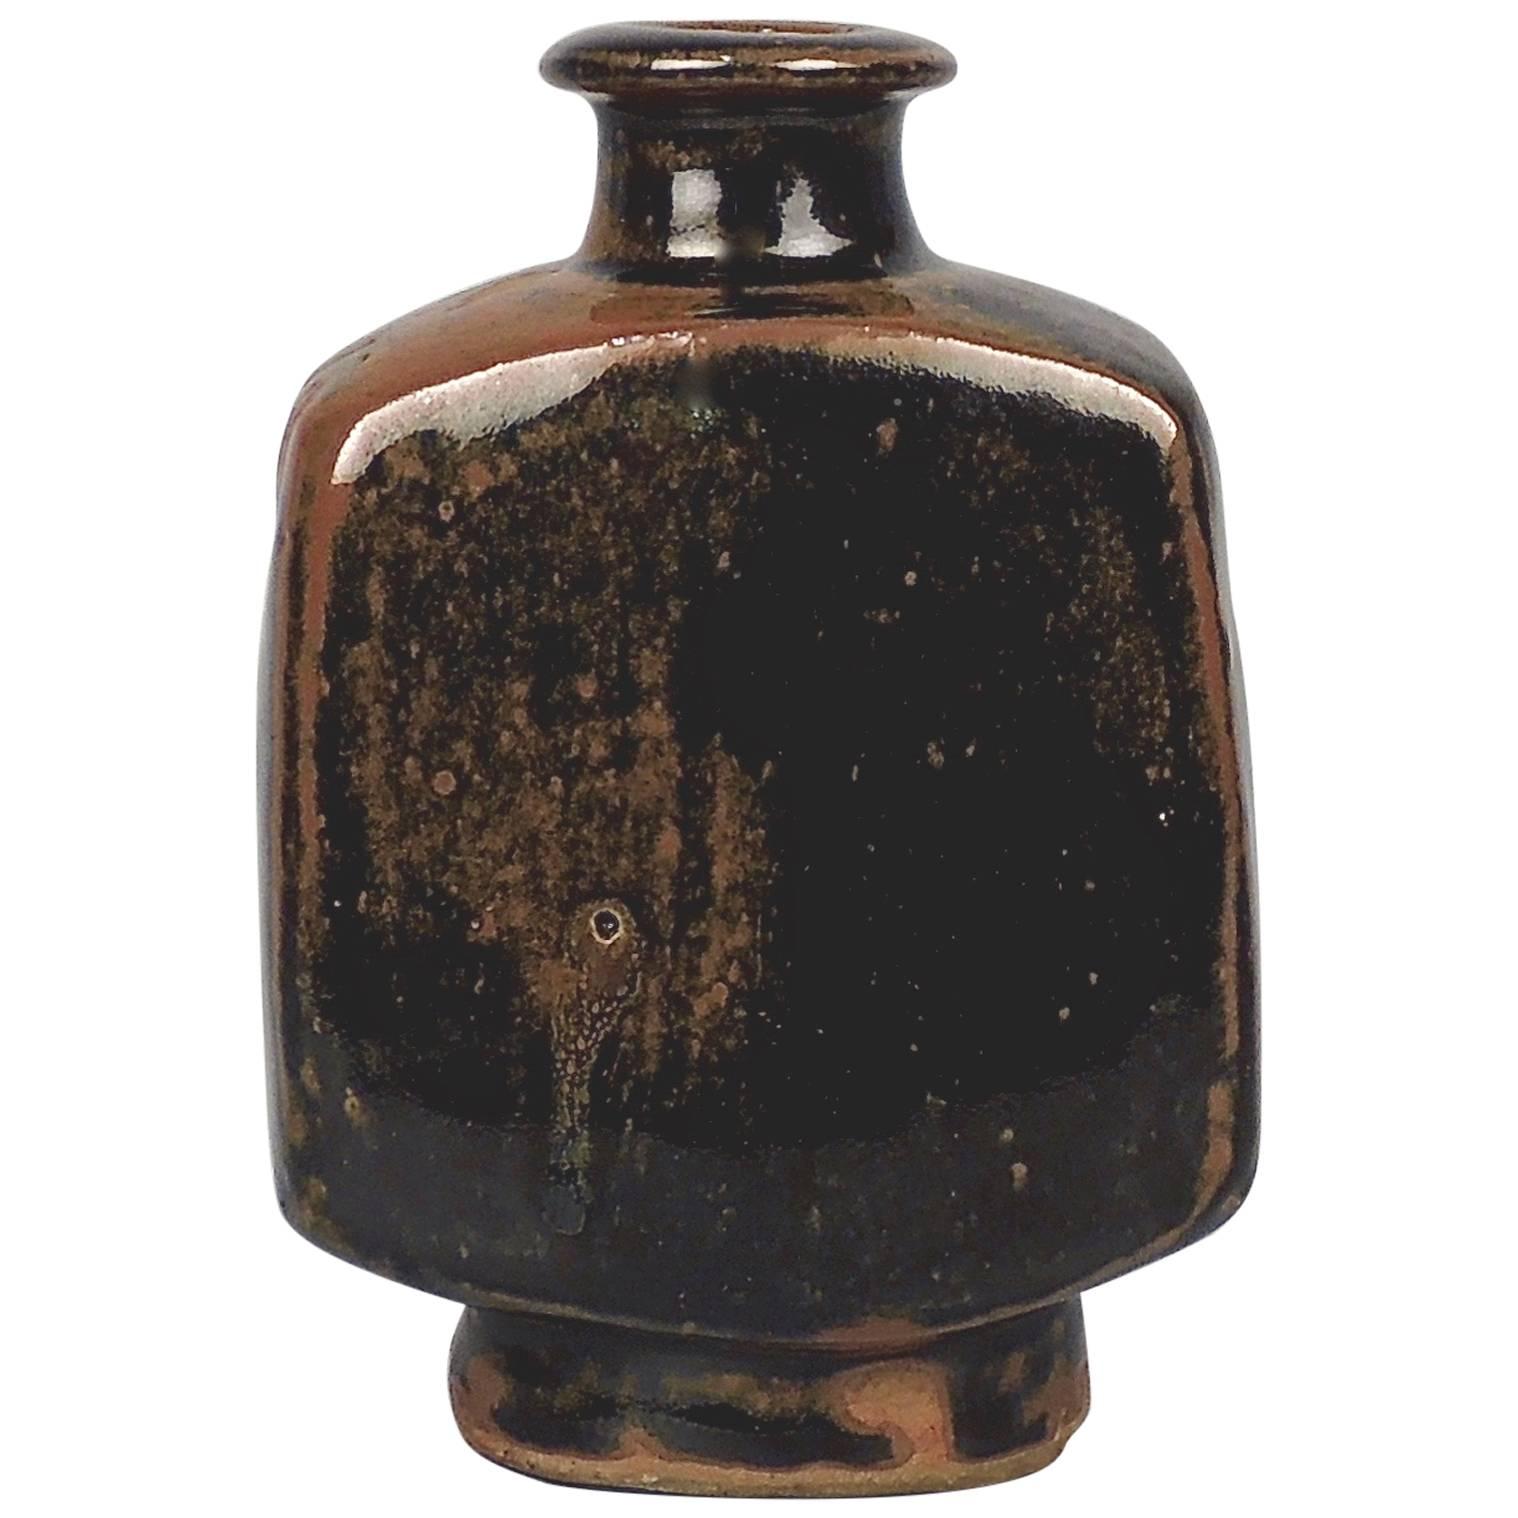 Tenmoku Stoneware Square Bottle Vase, St. Ives Pottery, by Bernard Leach